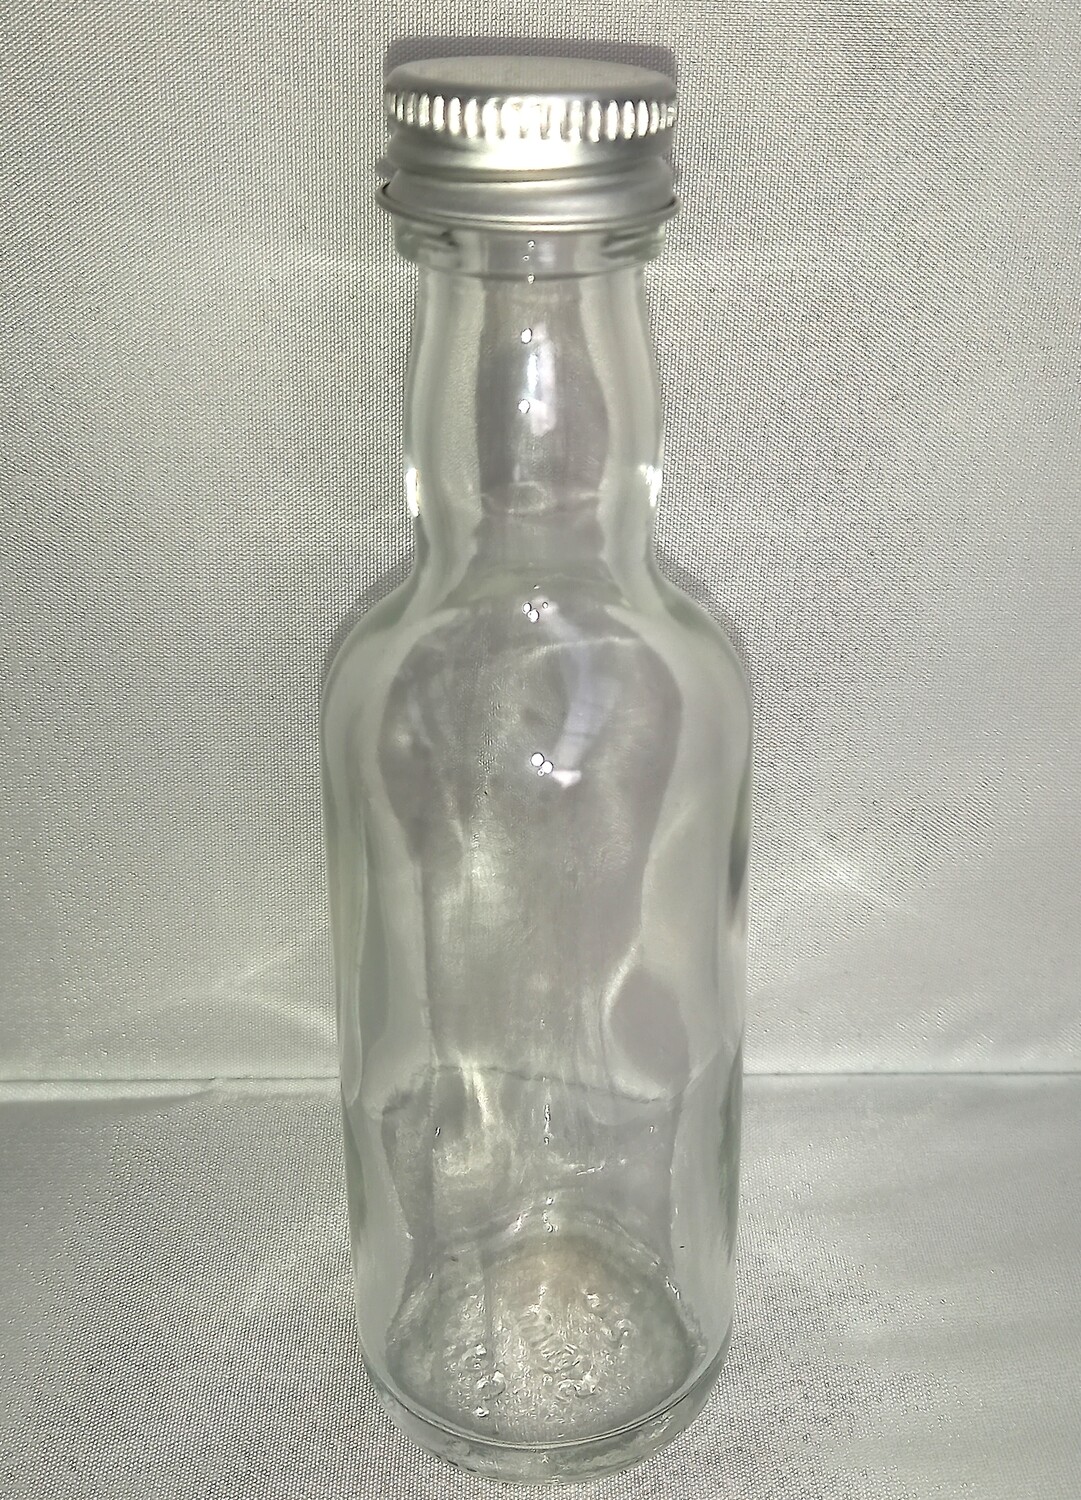 Mini Gift Glass Bottles with caps 50ml